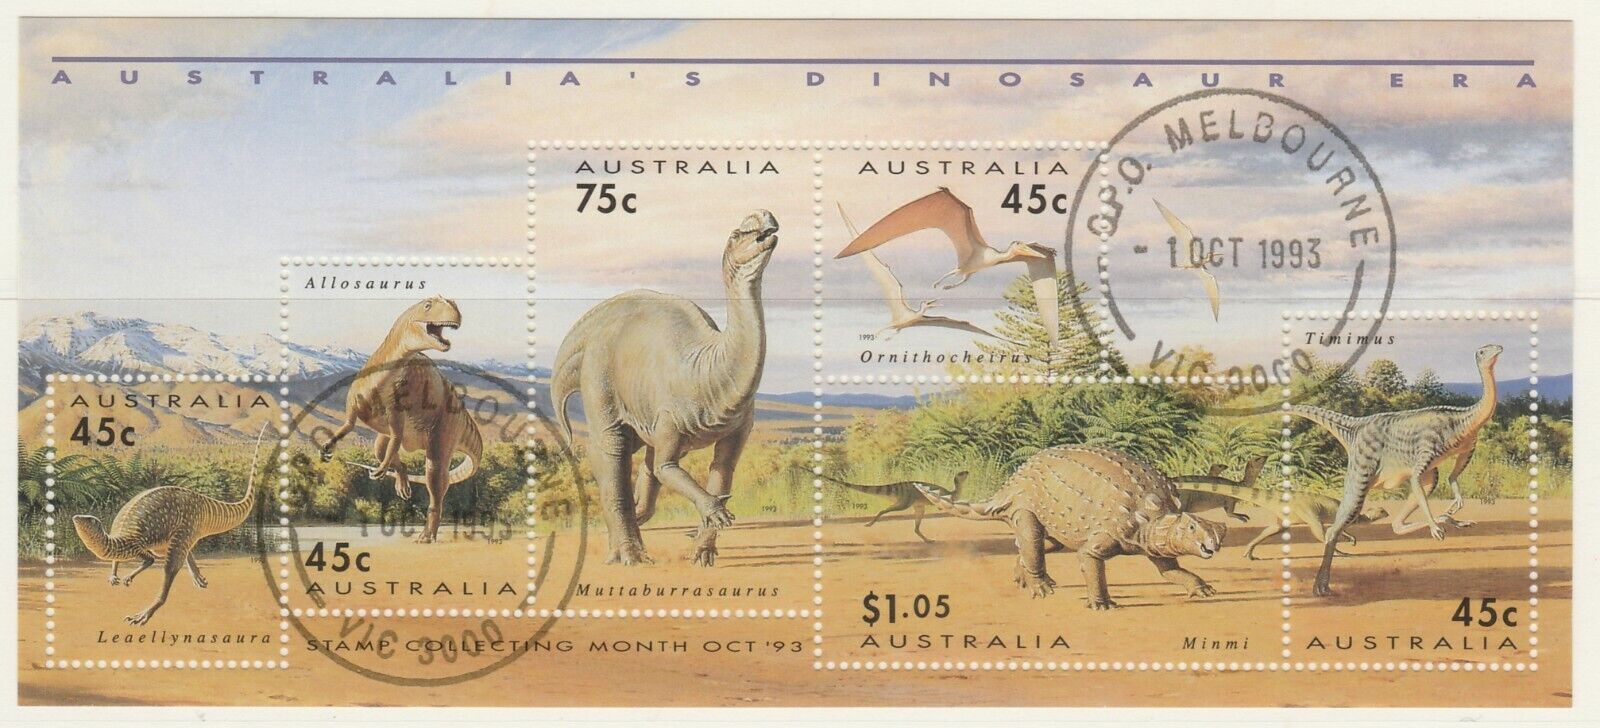 Australia 1993 Dinosaurs Sheet Used Cheap sale Fine Genuine Free Shipping 12001